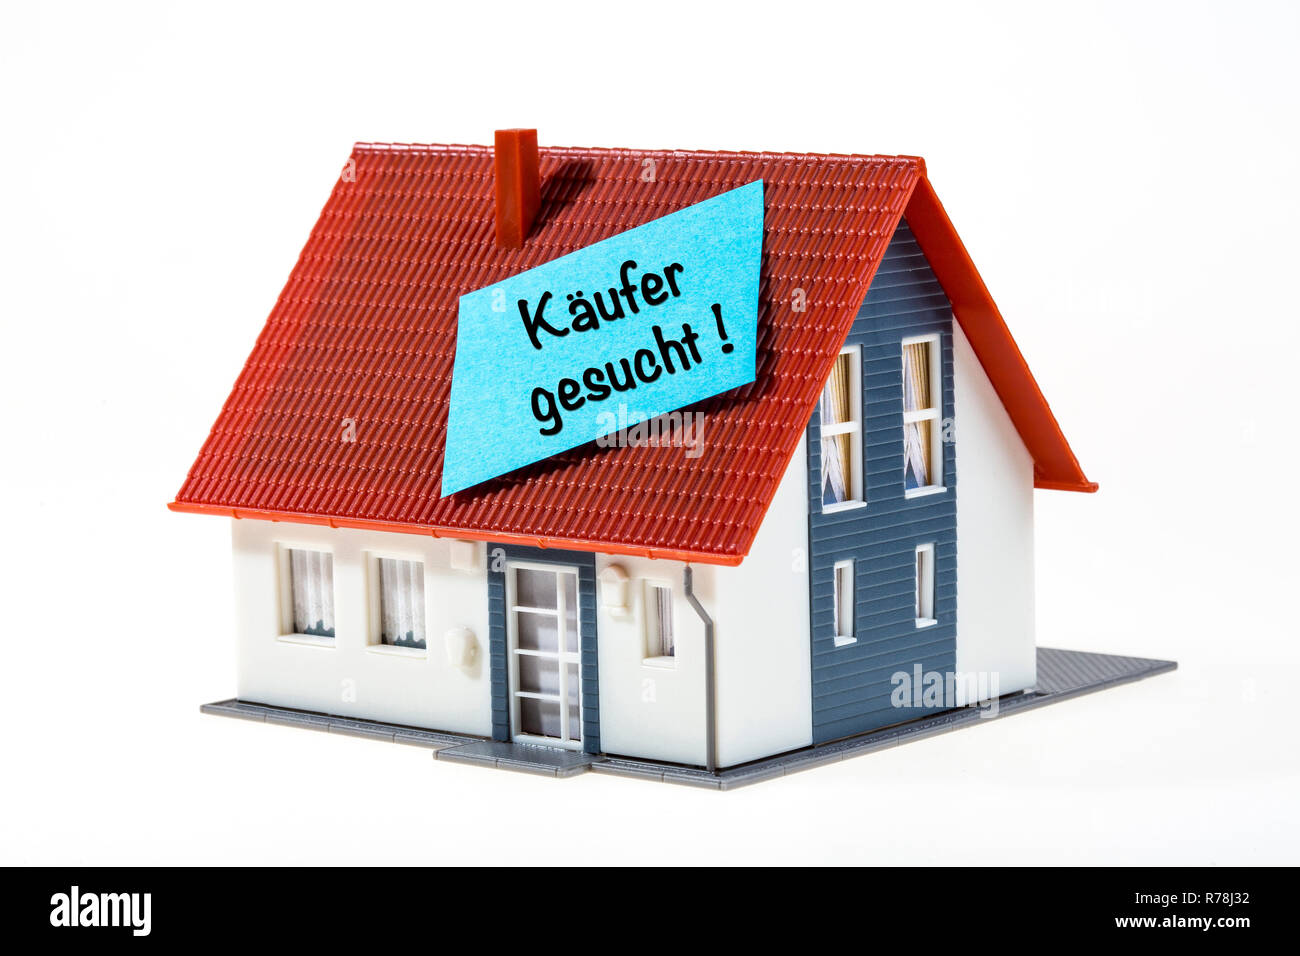 Real estate symbol, looking for buyers, German language Stock Photo